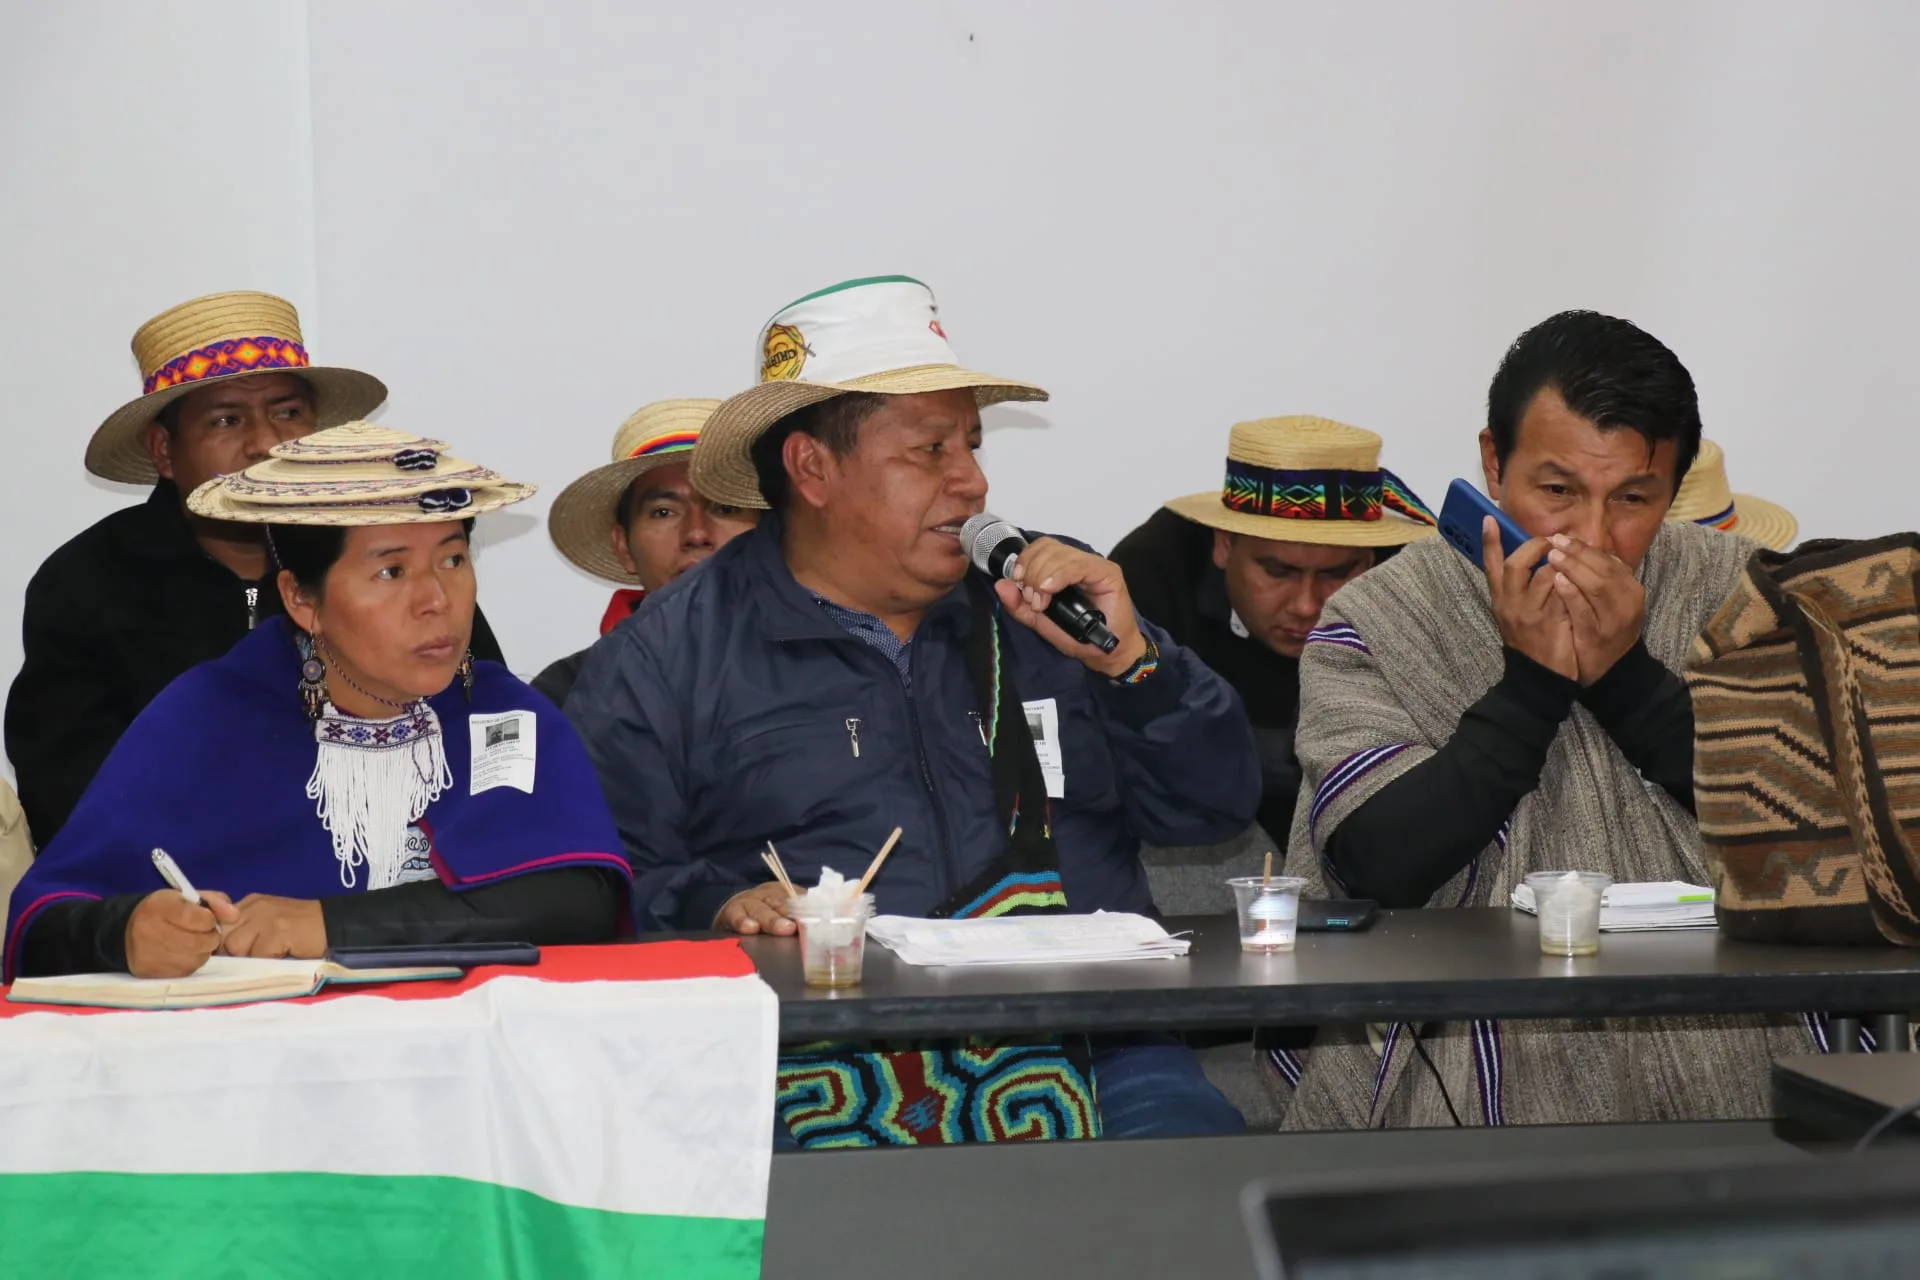 Avanza la Minga Indígena del Huila en Bogotá